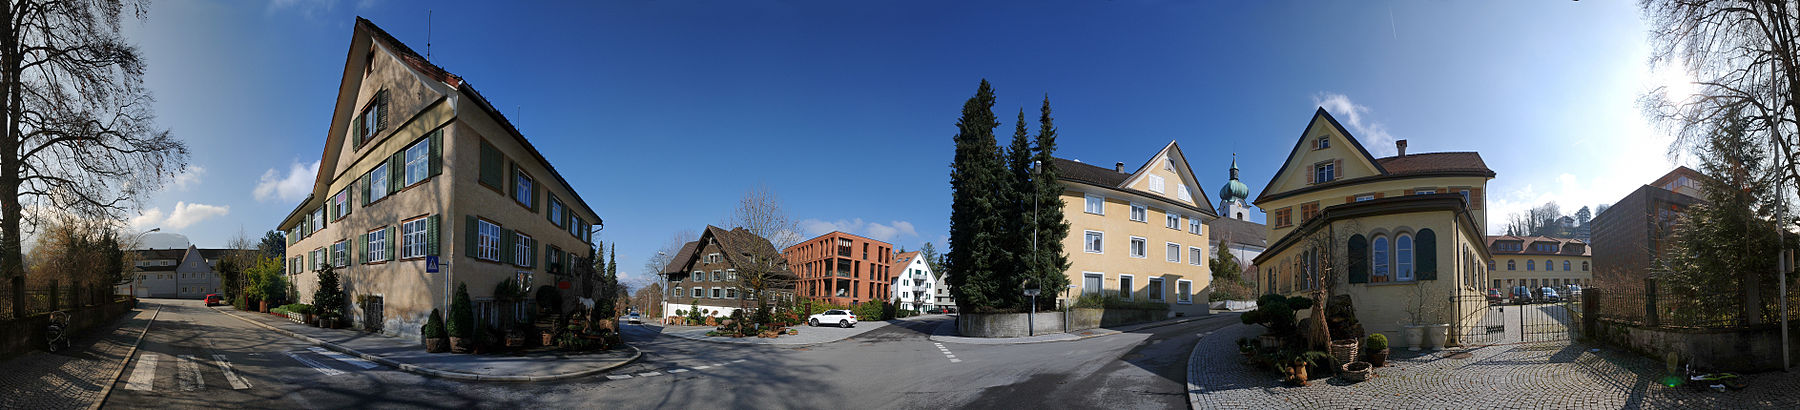 Schloßgasse, Dornbirn Oberdorf